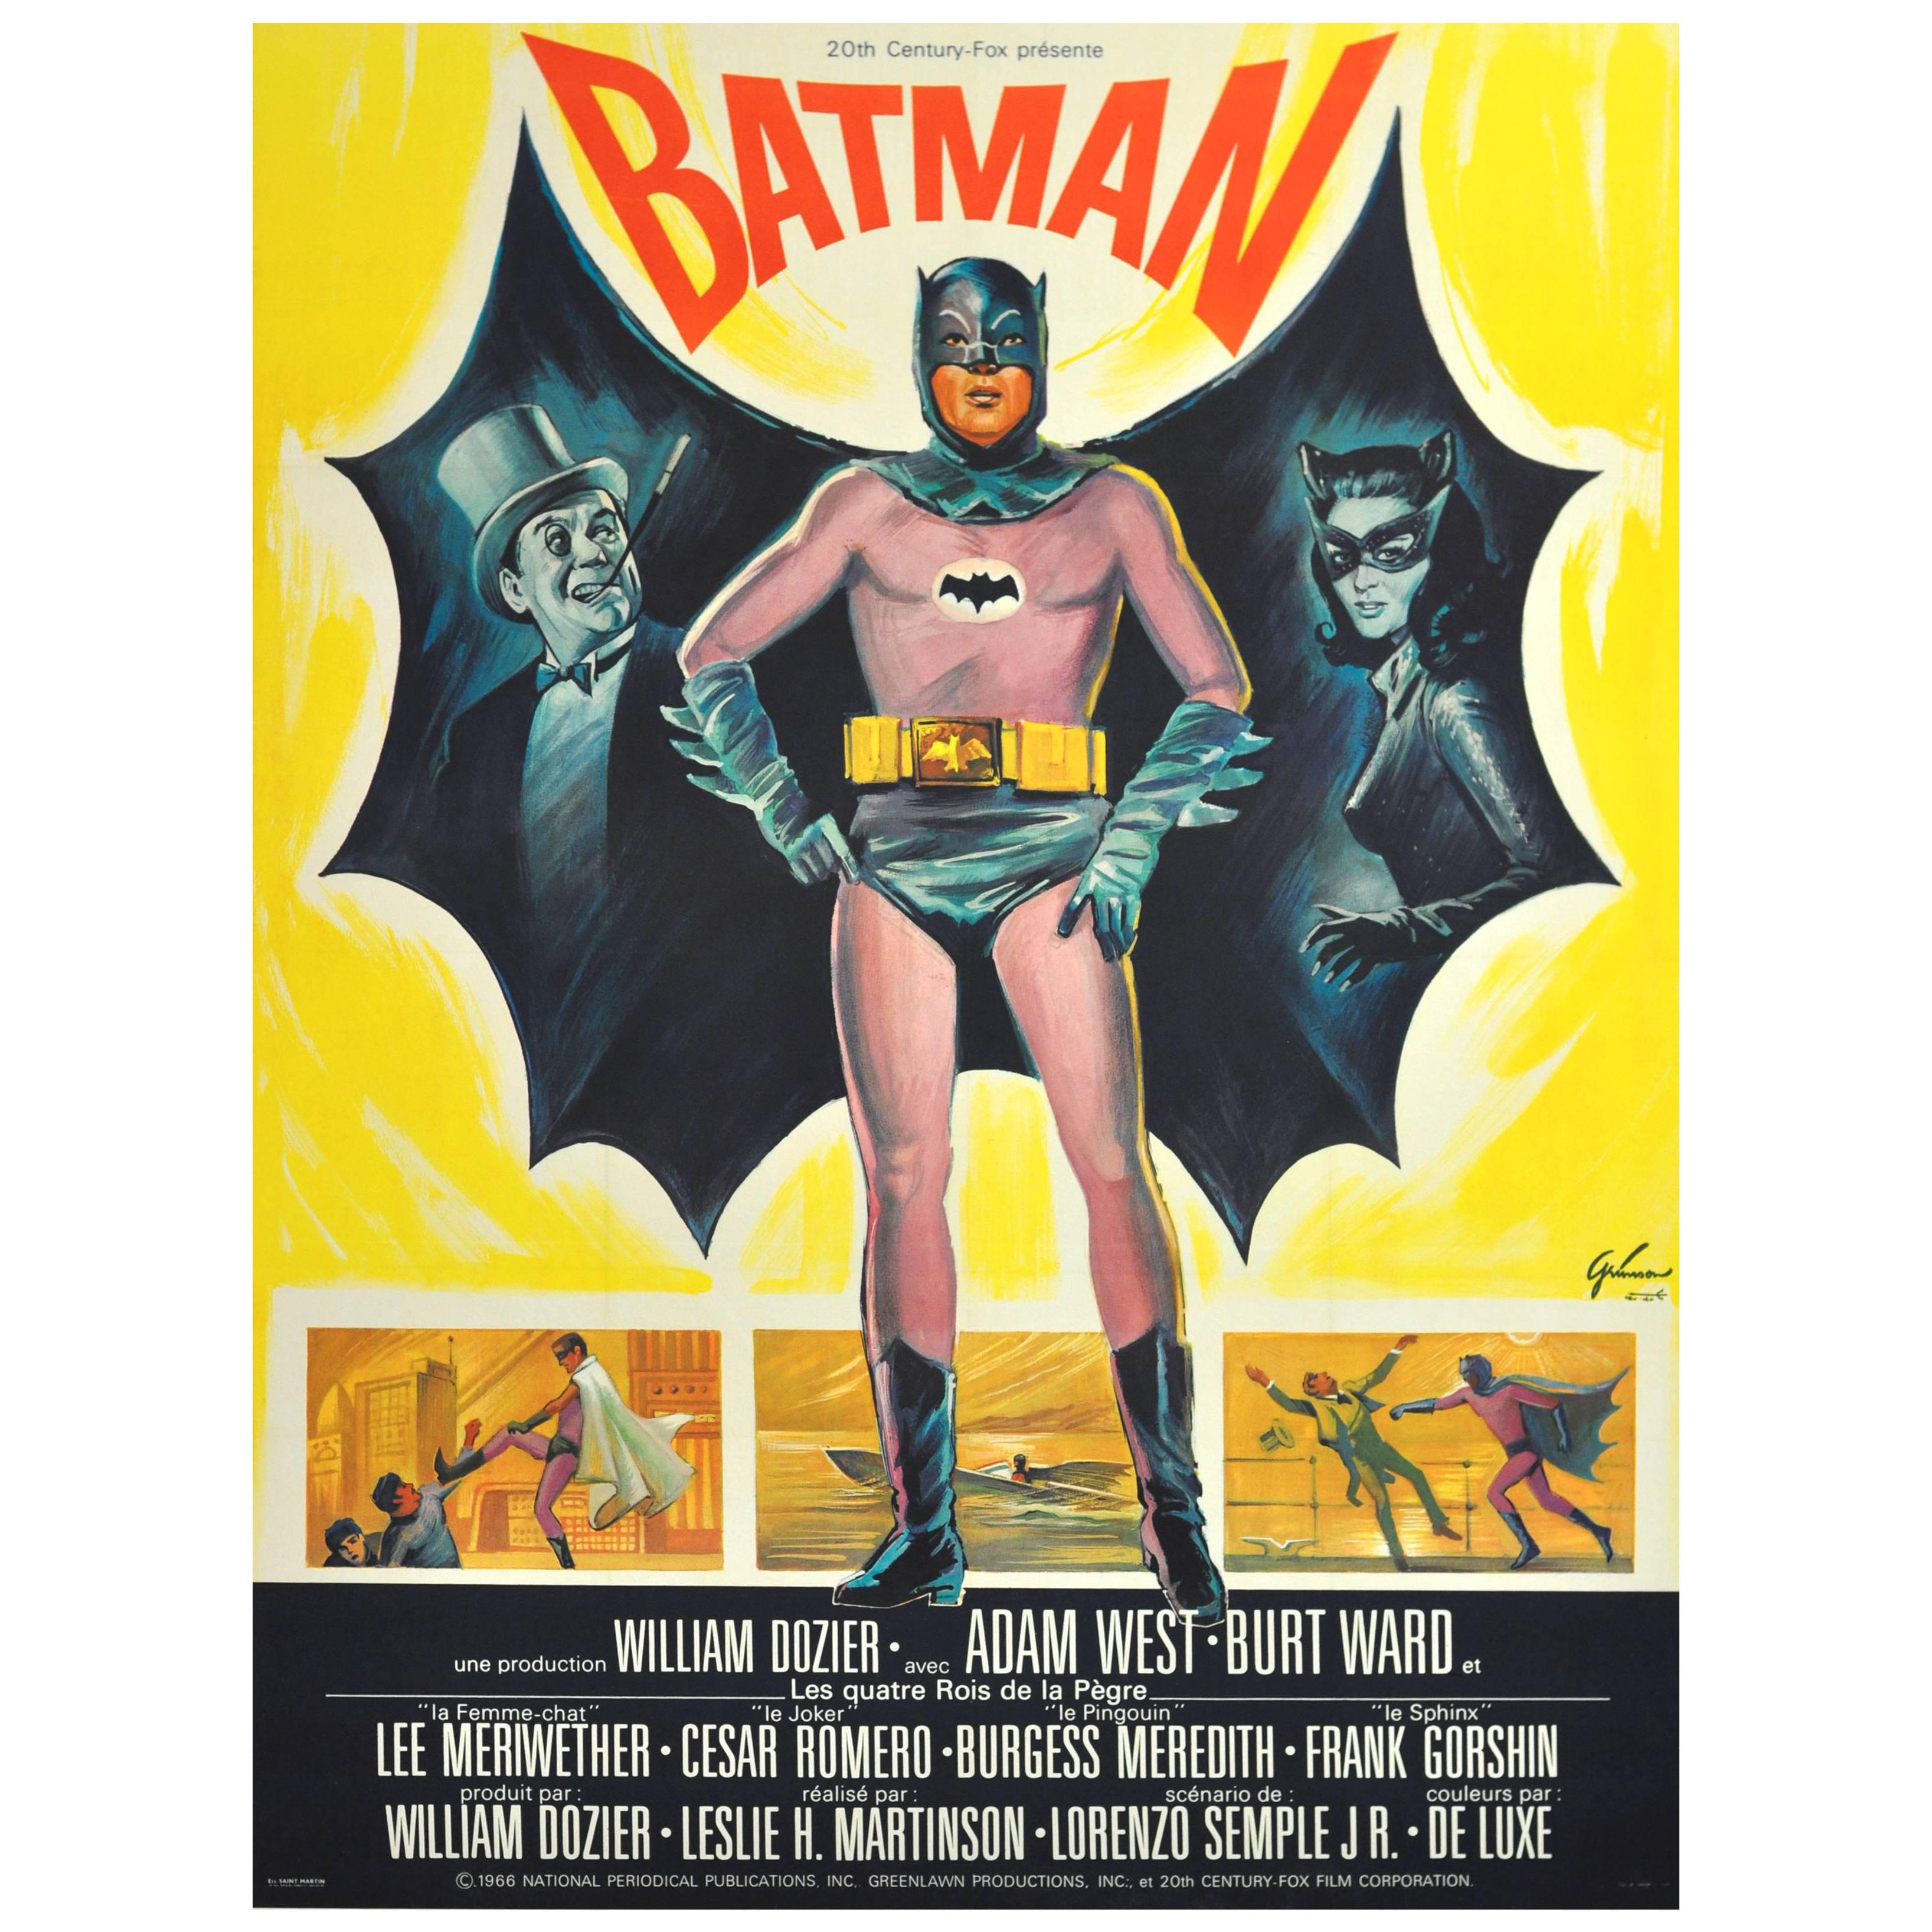 Art Print Poster Canvas Batman 1966 Film Adam West Burt Ward